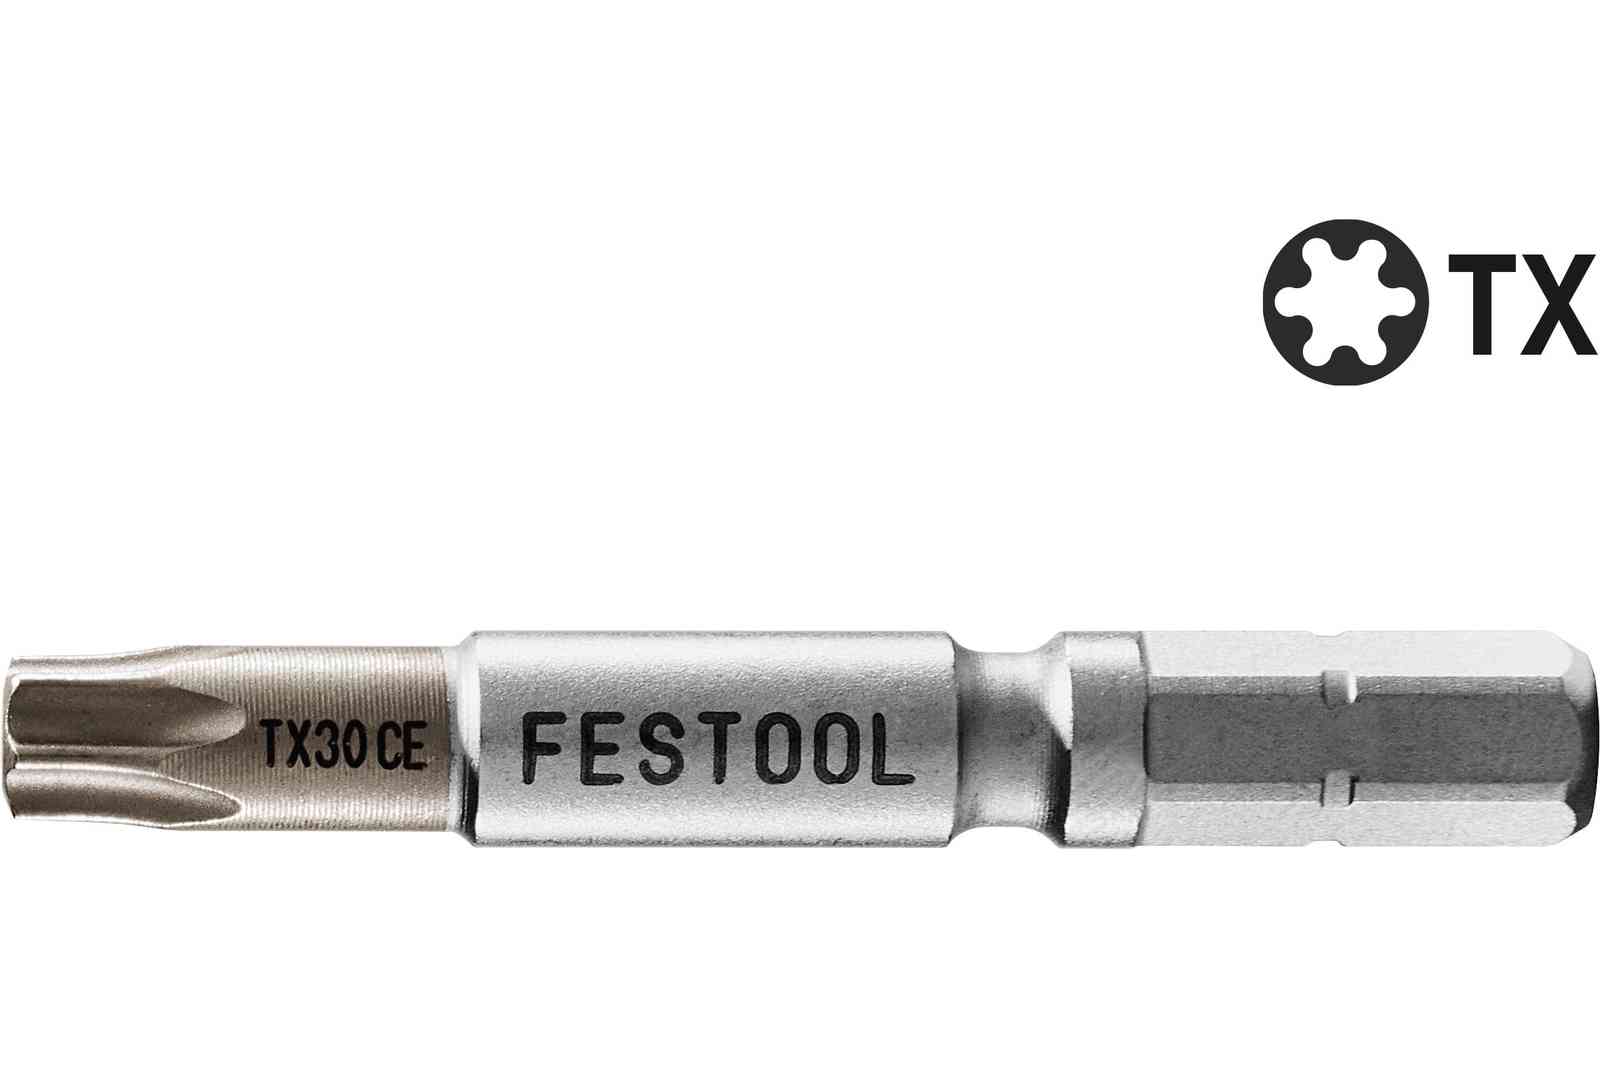 Festool Bits TX TX 30-50 CENTRO/2